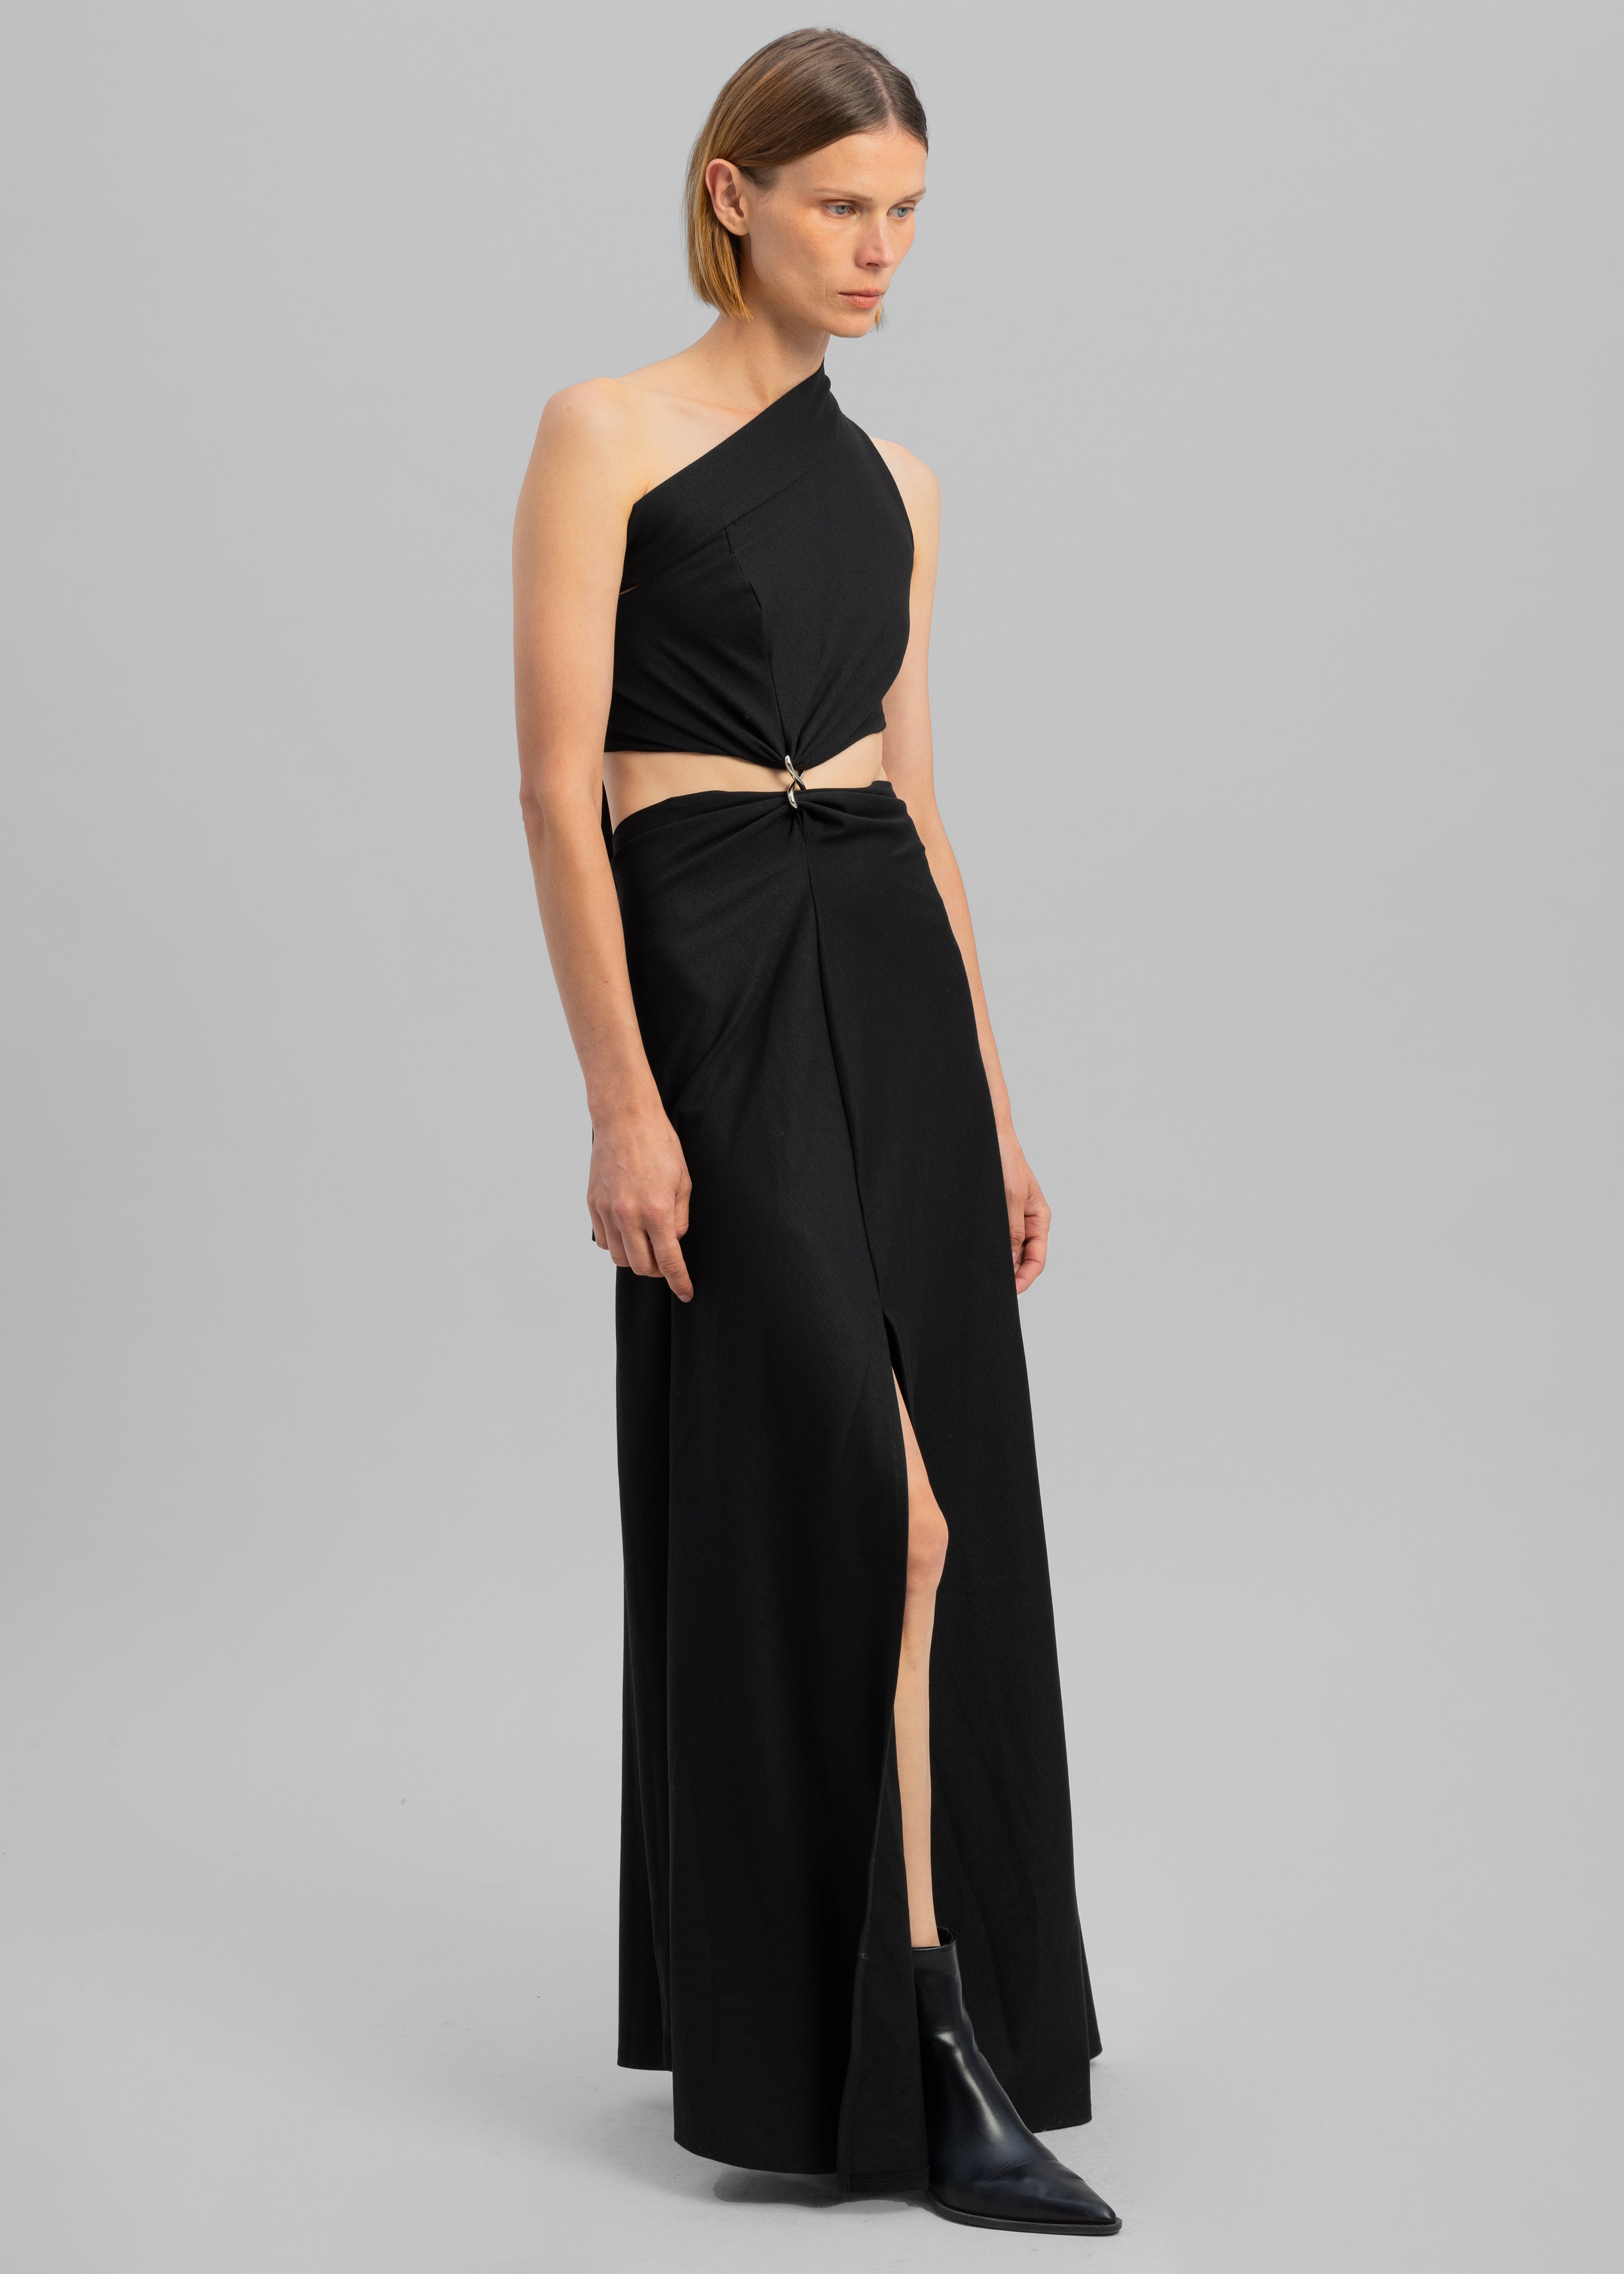 Sid Neigum Knit One-Shoulder Strap Dress W Hardware Detail - Black - 5